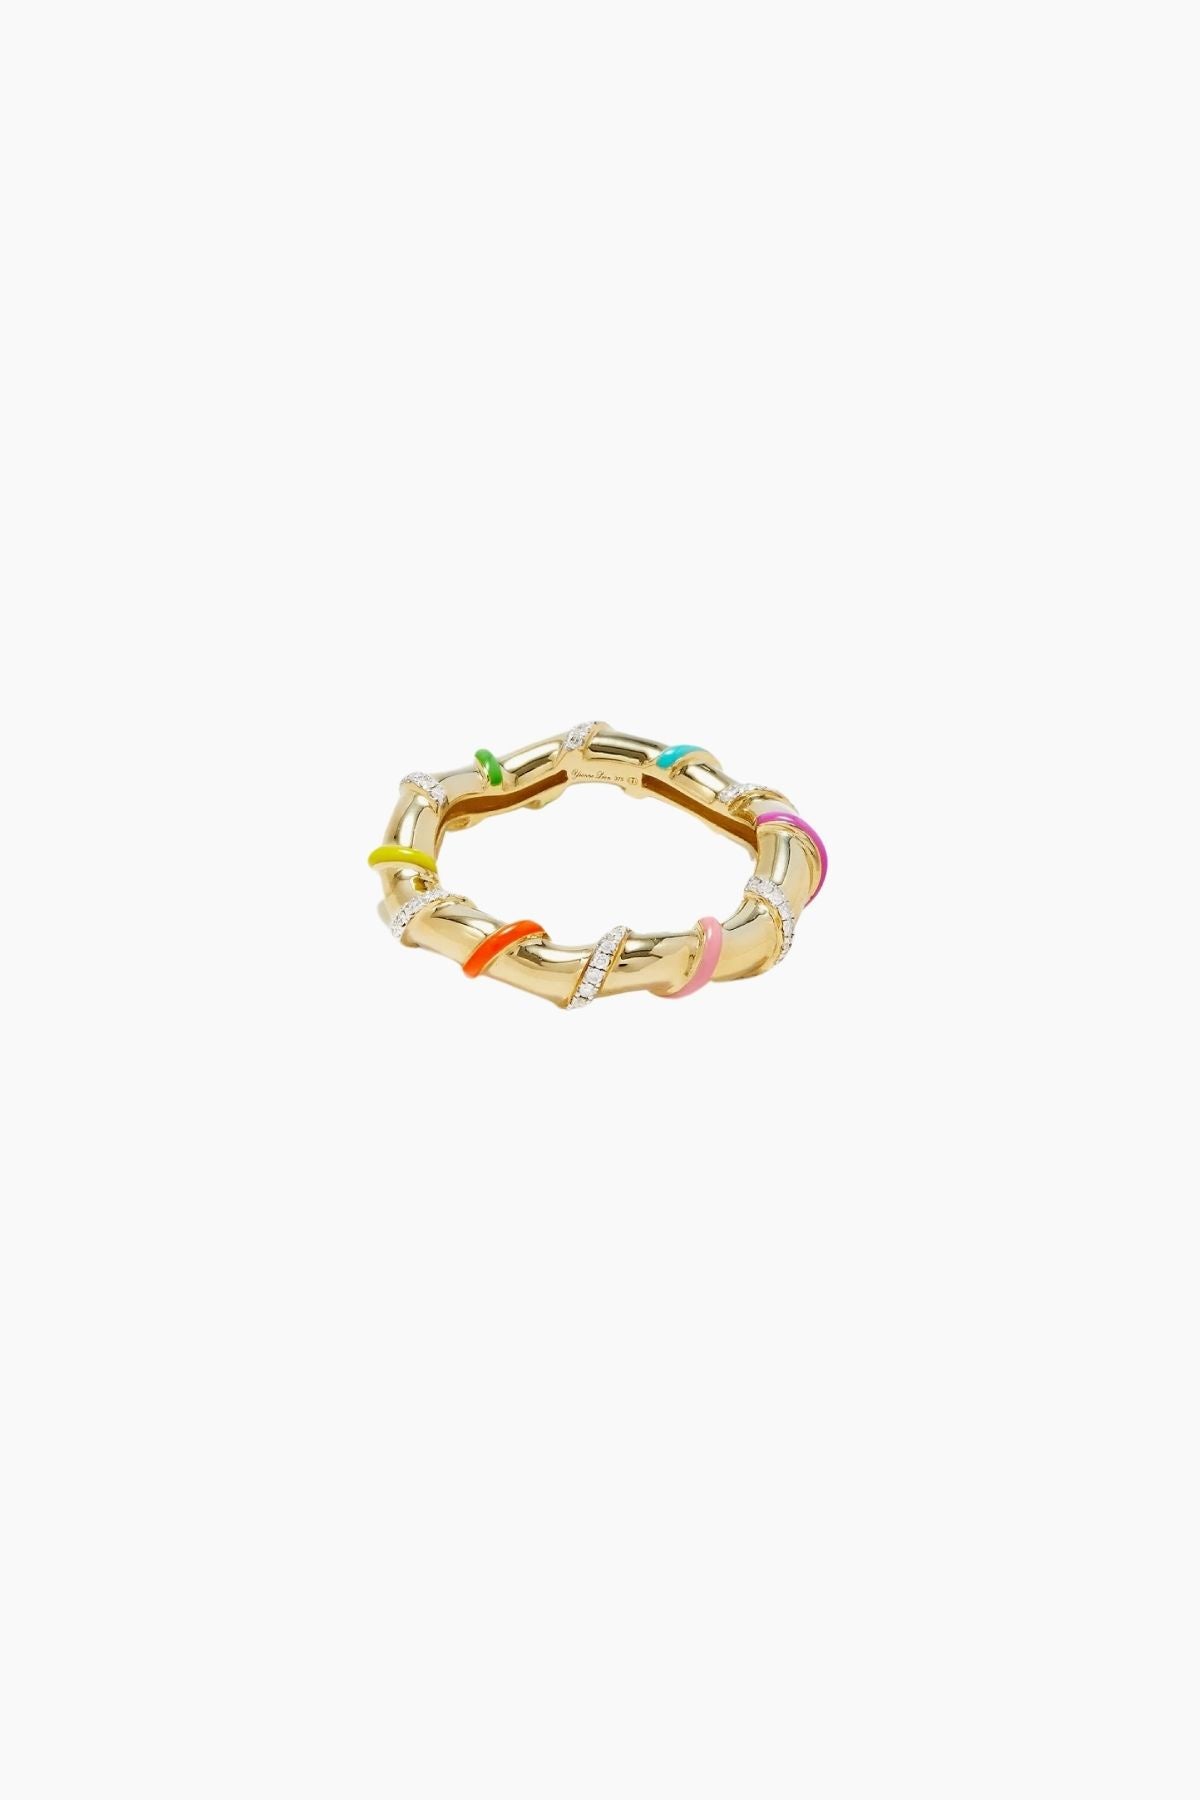 Yvonne Léon Twisted Rainbow Ring - Yellow Gold Multi